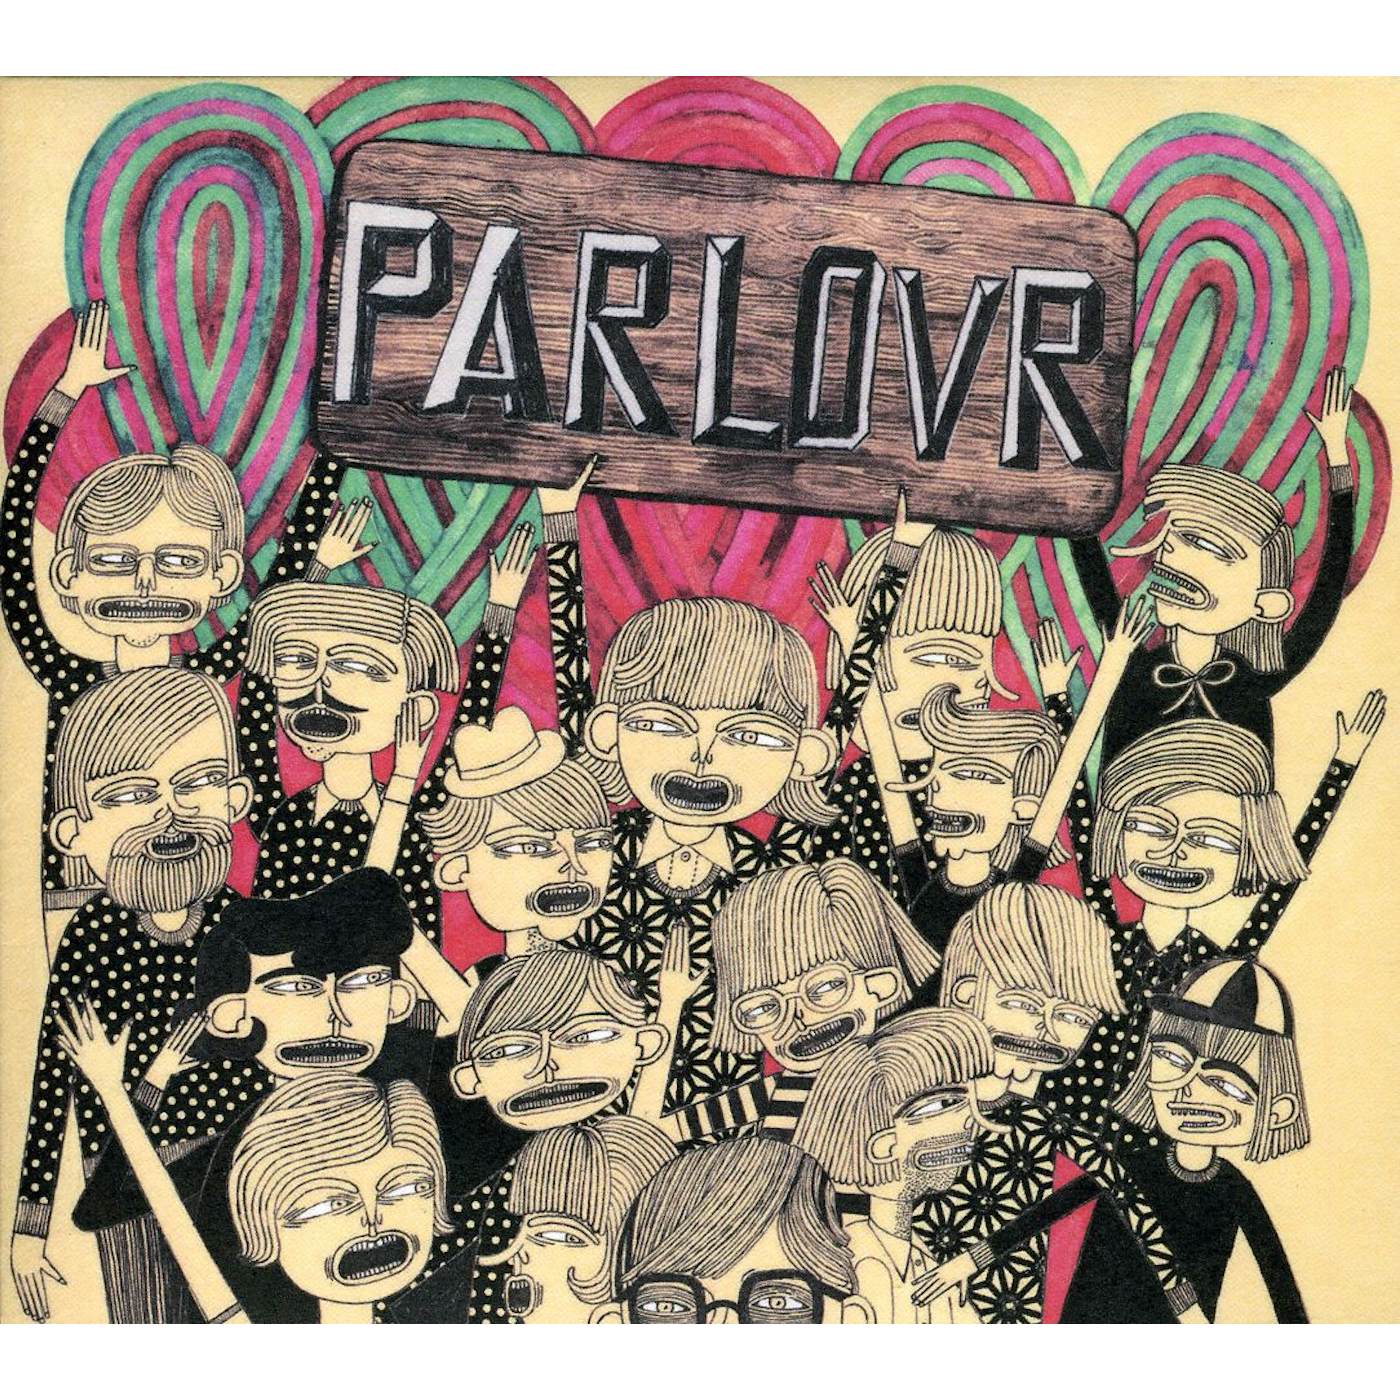 PARLOVR CD